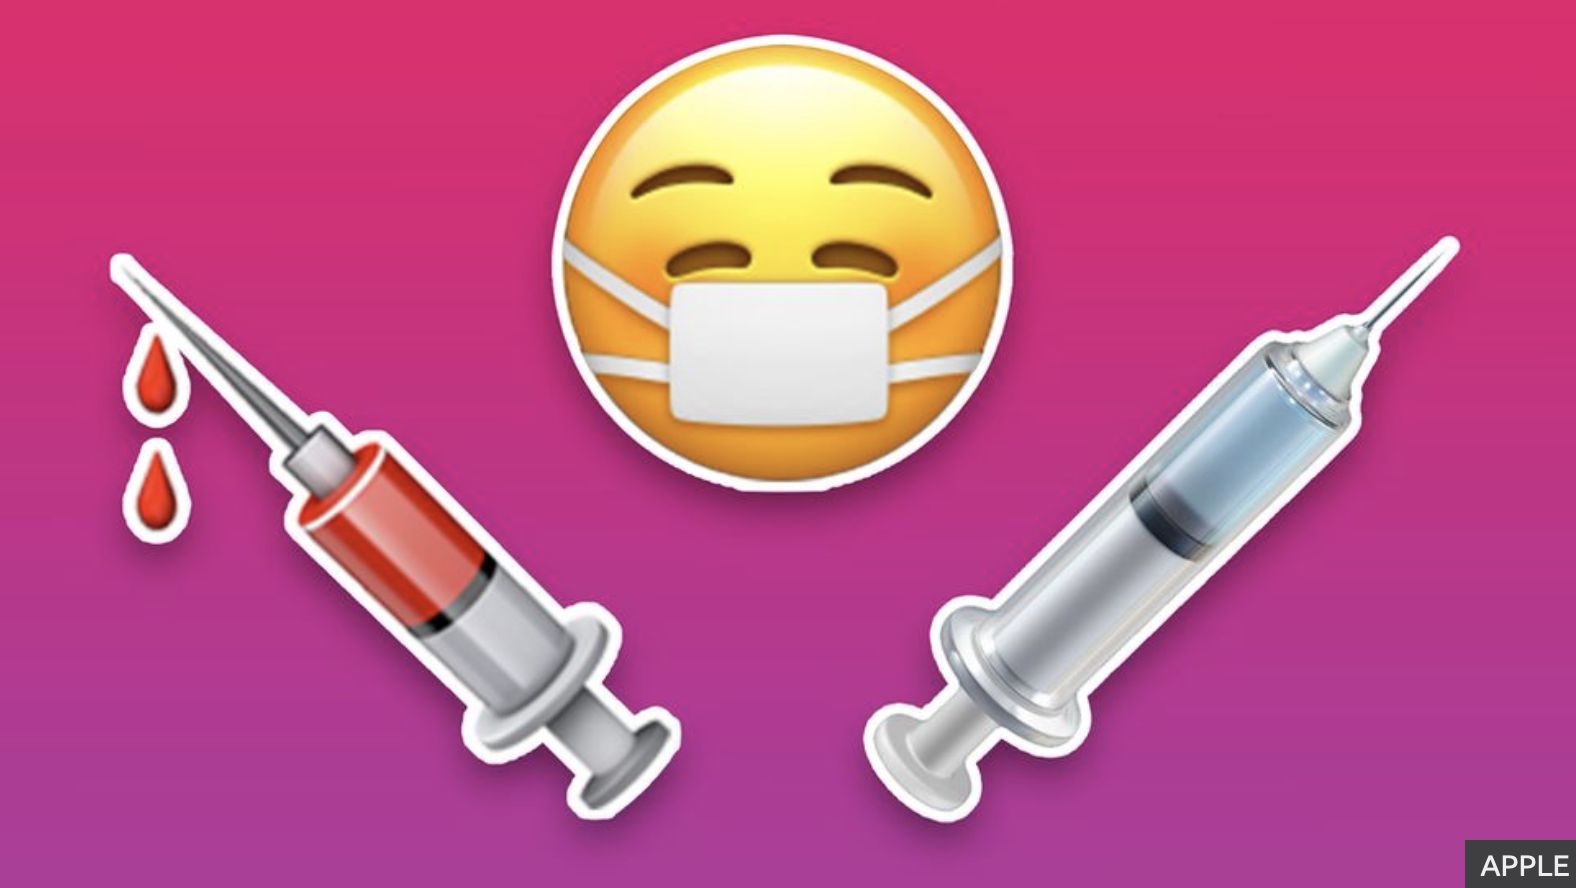 Apple emoji: Η εταιρεία αλλάζει το εικονίδιο της σύριγγας λόγω των εμβολίων Covid